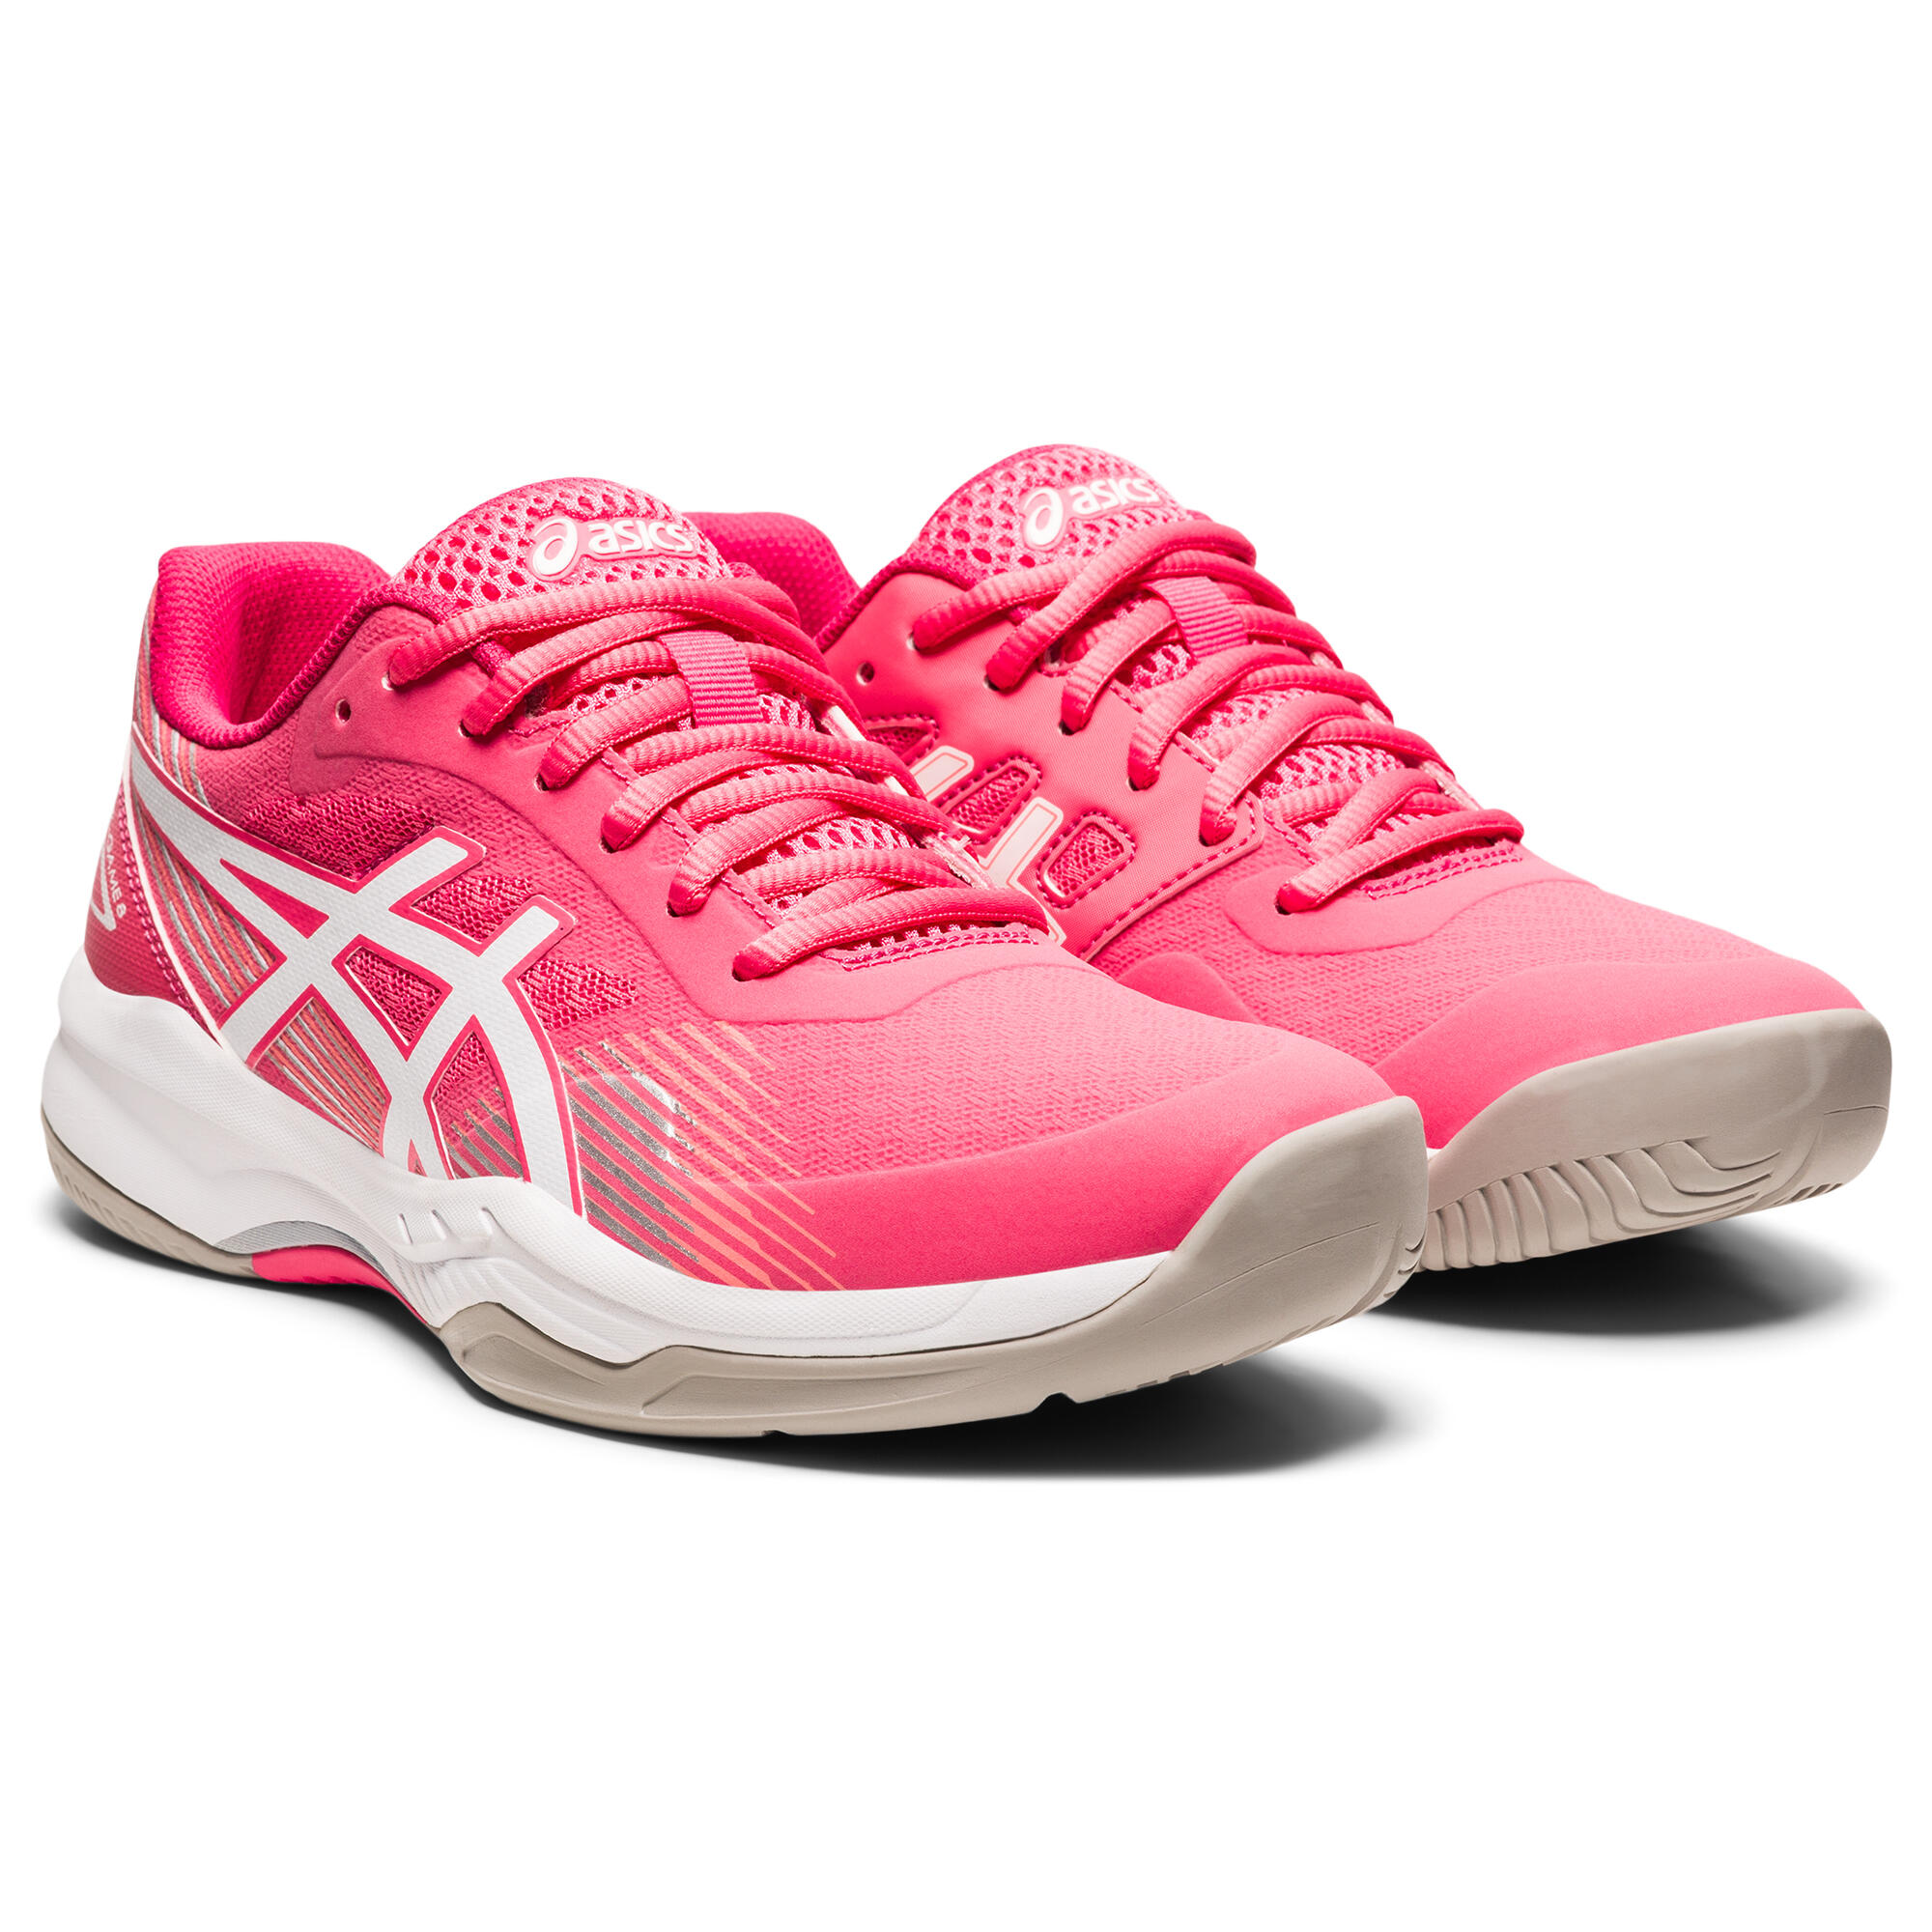 Women's Tennis Shoes Gel Game - Pink/White 3/7